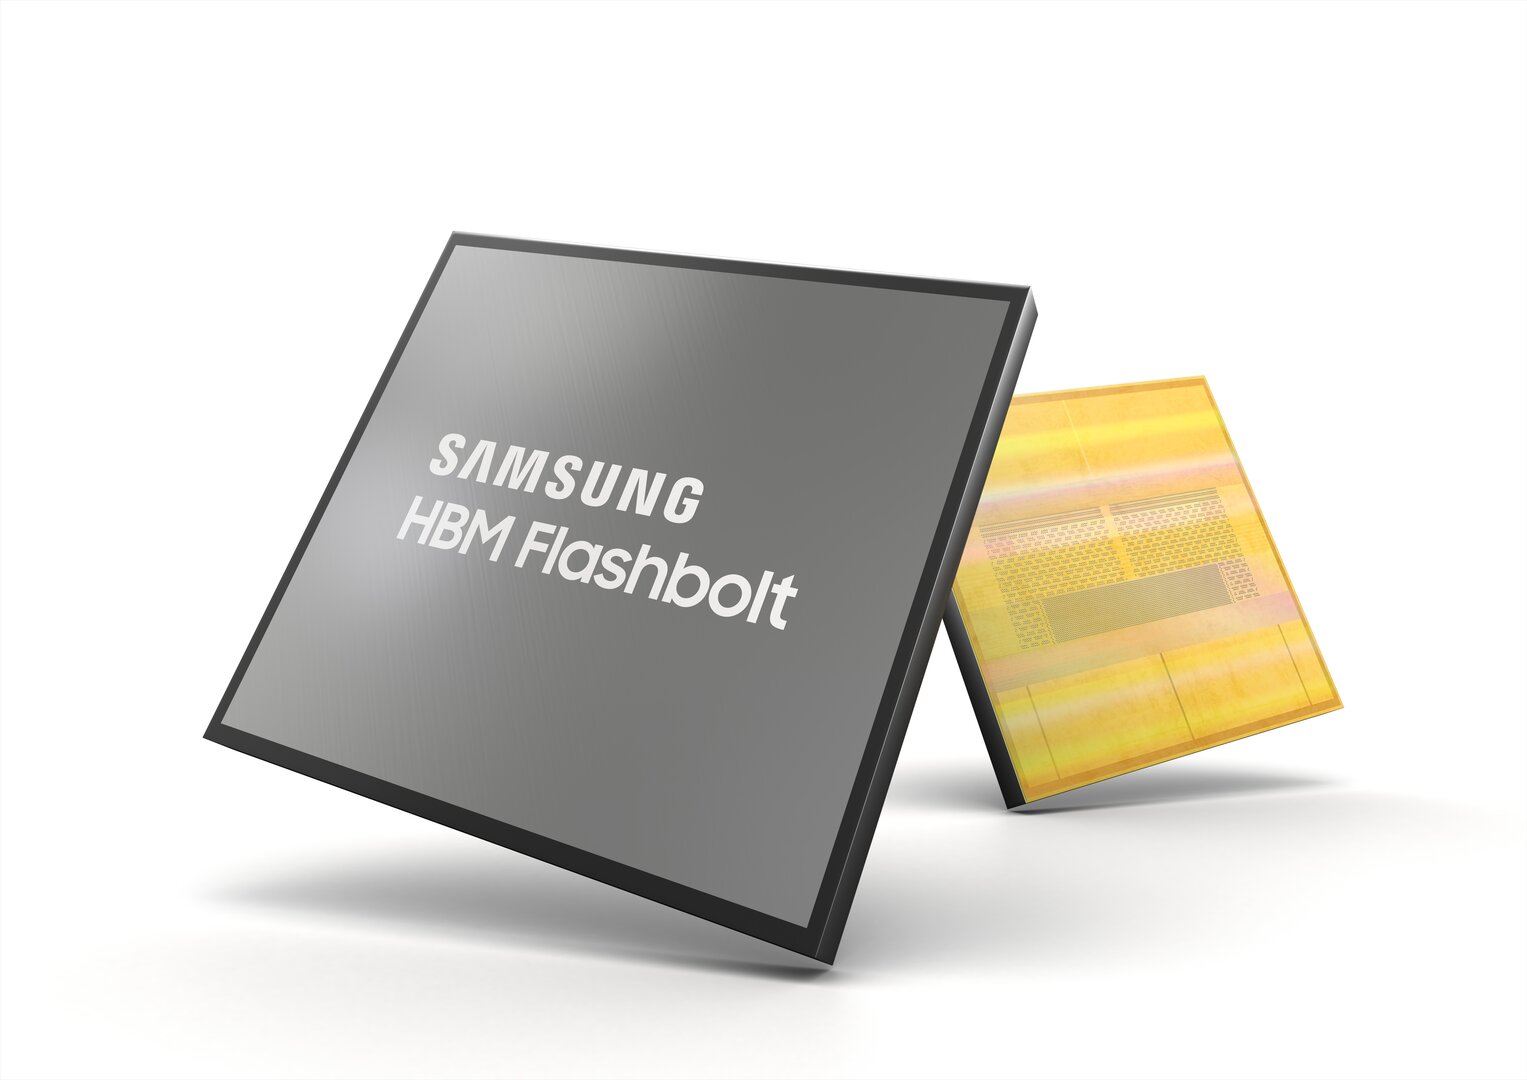 Samsung 16 GB HBM2E Flashbolt